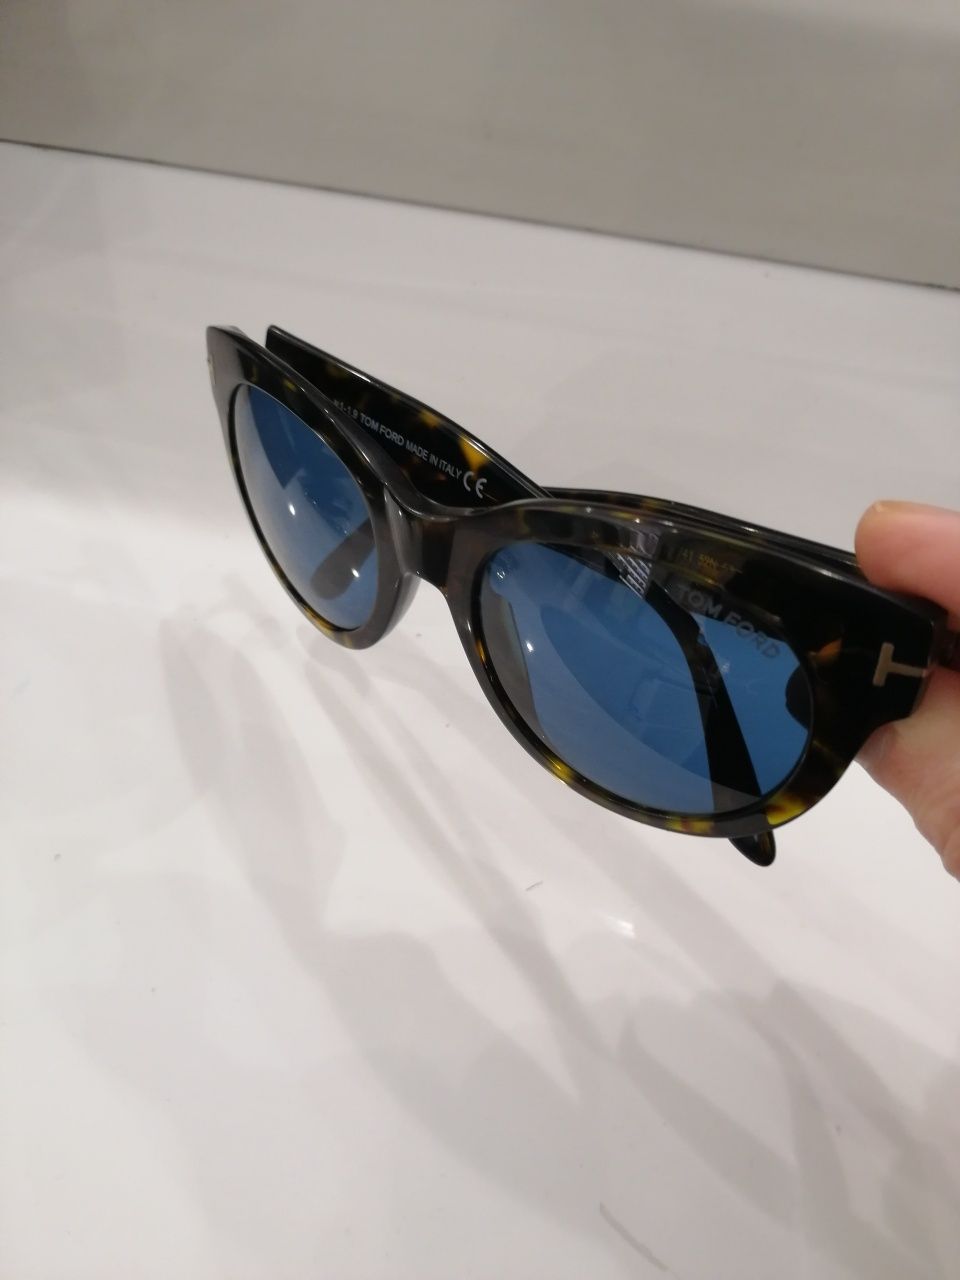 Слънчеви очила Tom Ford